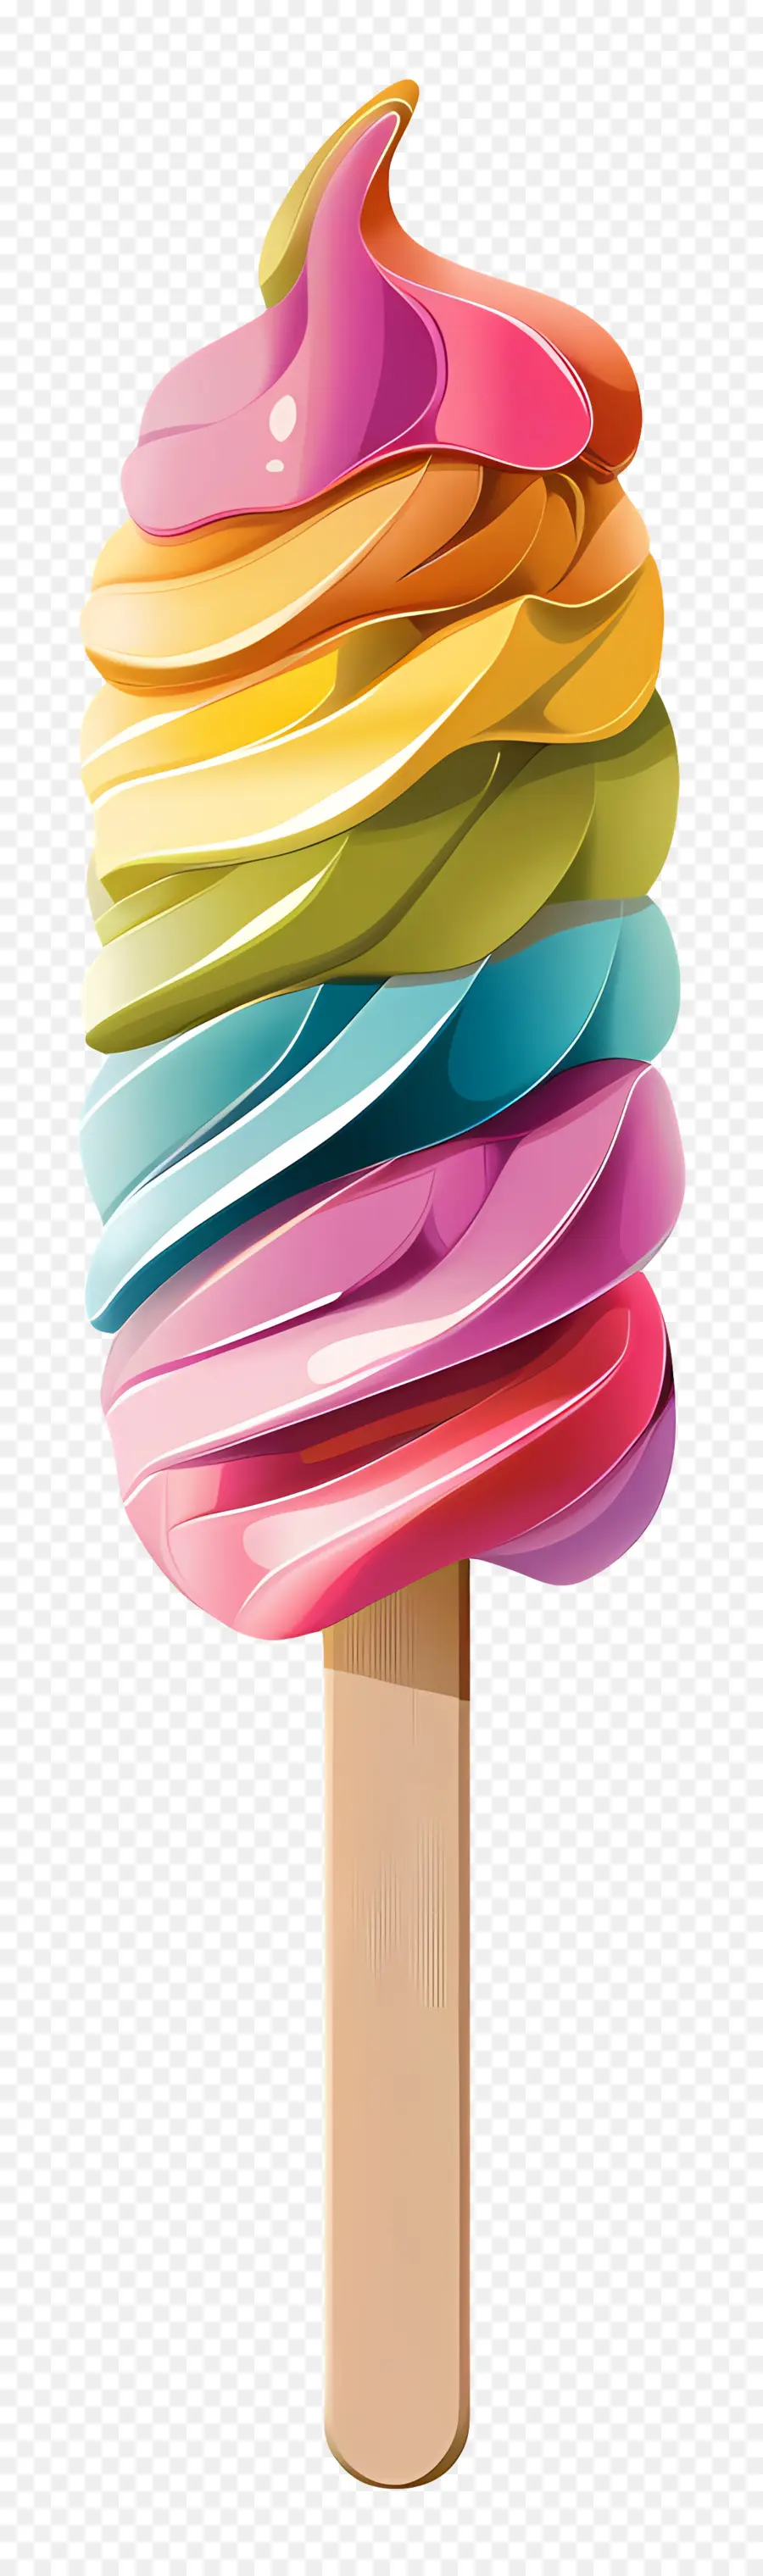 ice cream stick rainbow popsicle swirled icing colorful dessert ice cream treat